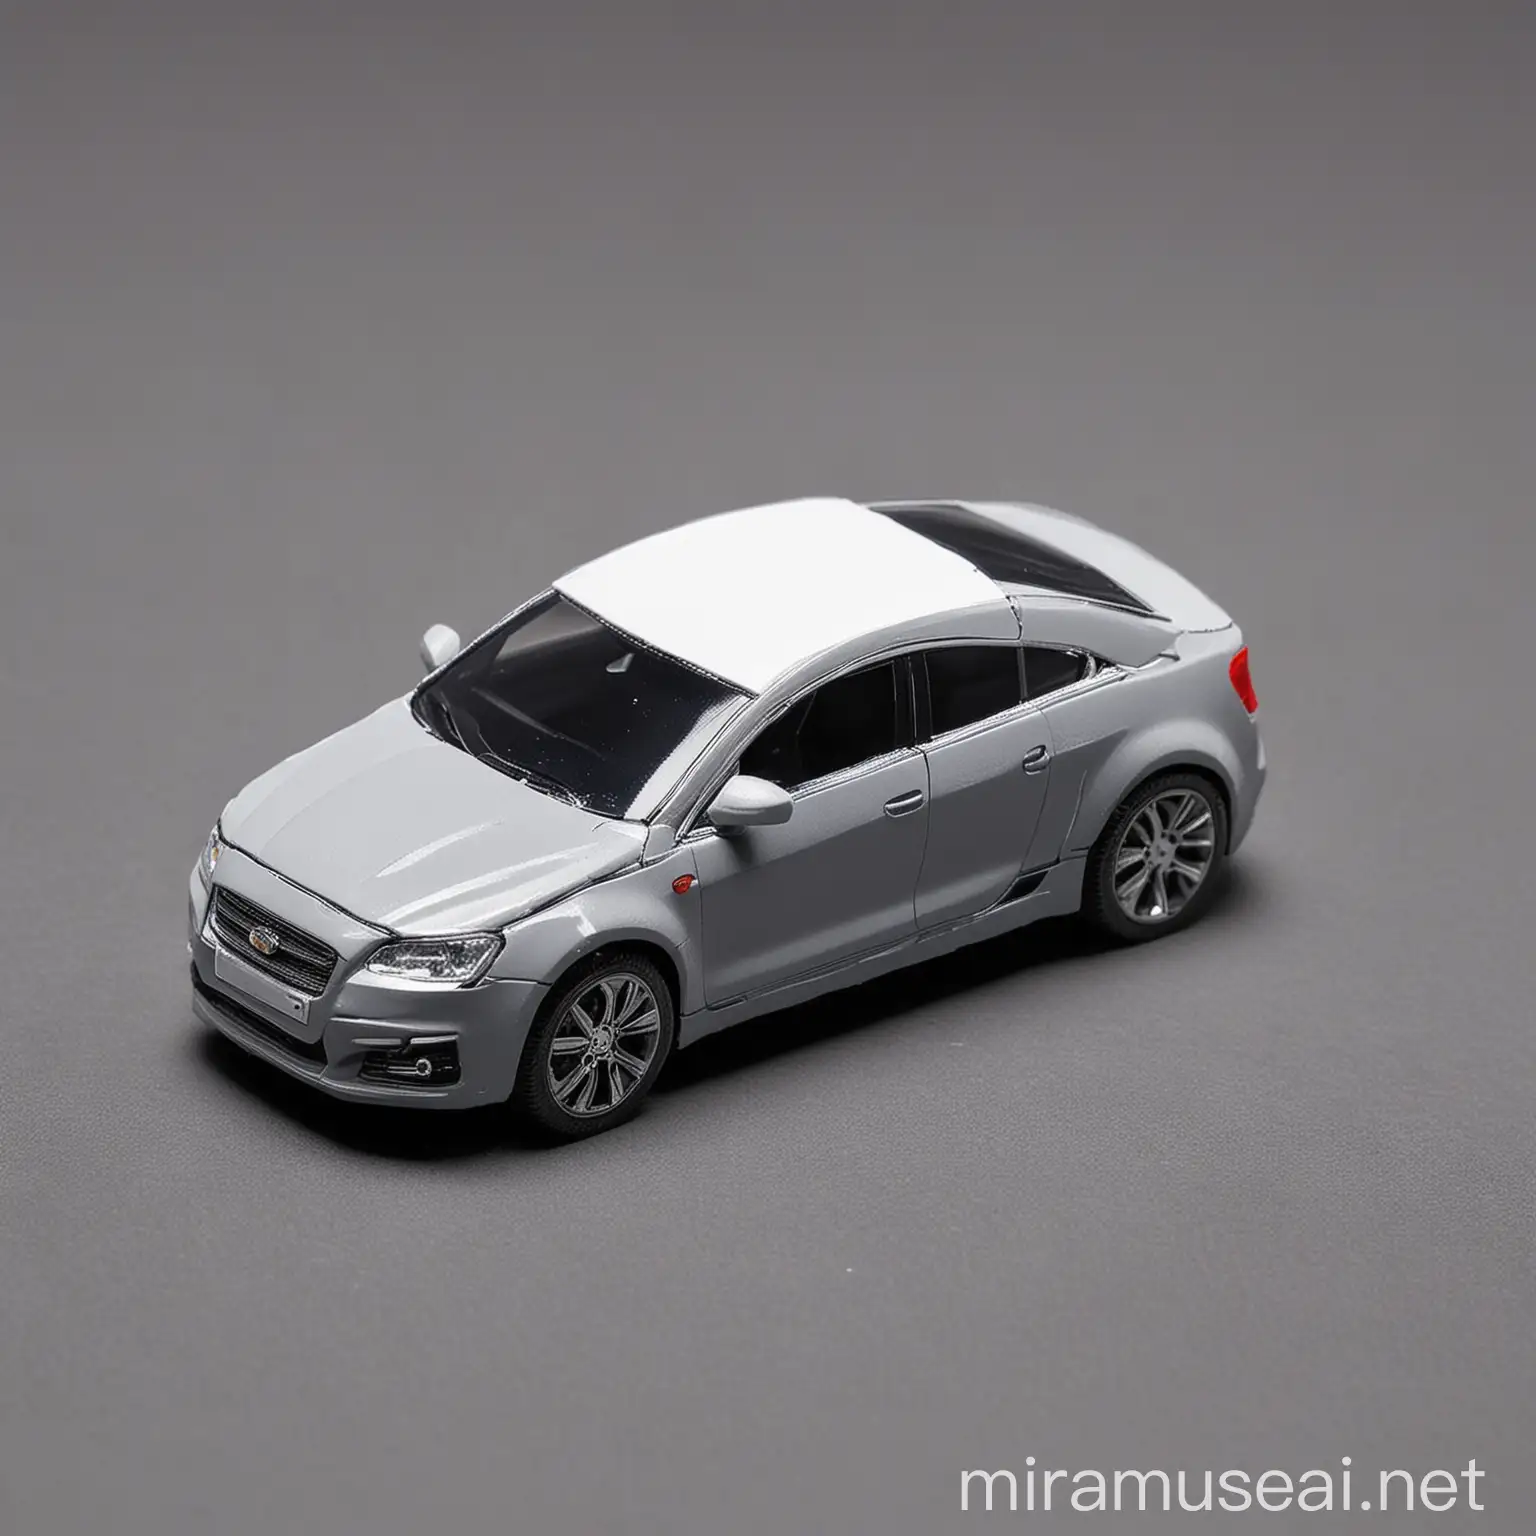 miniature modern gray car